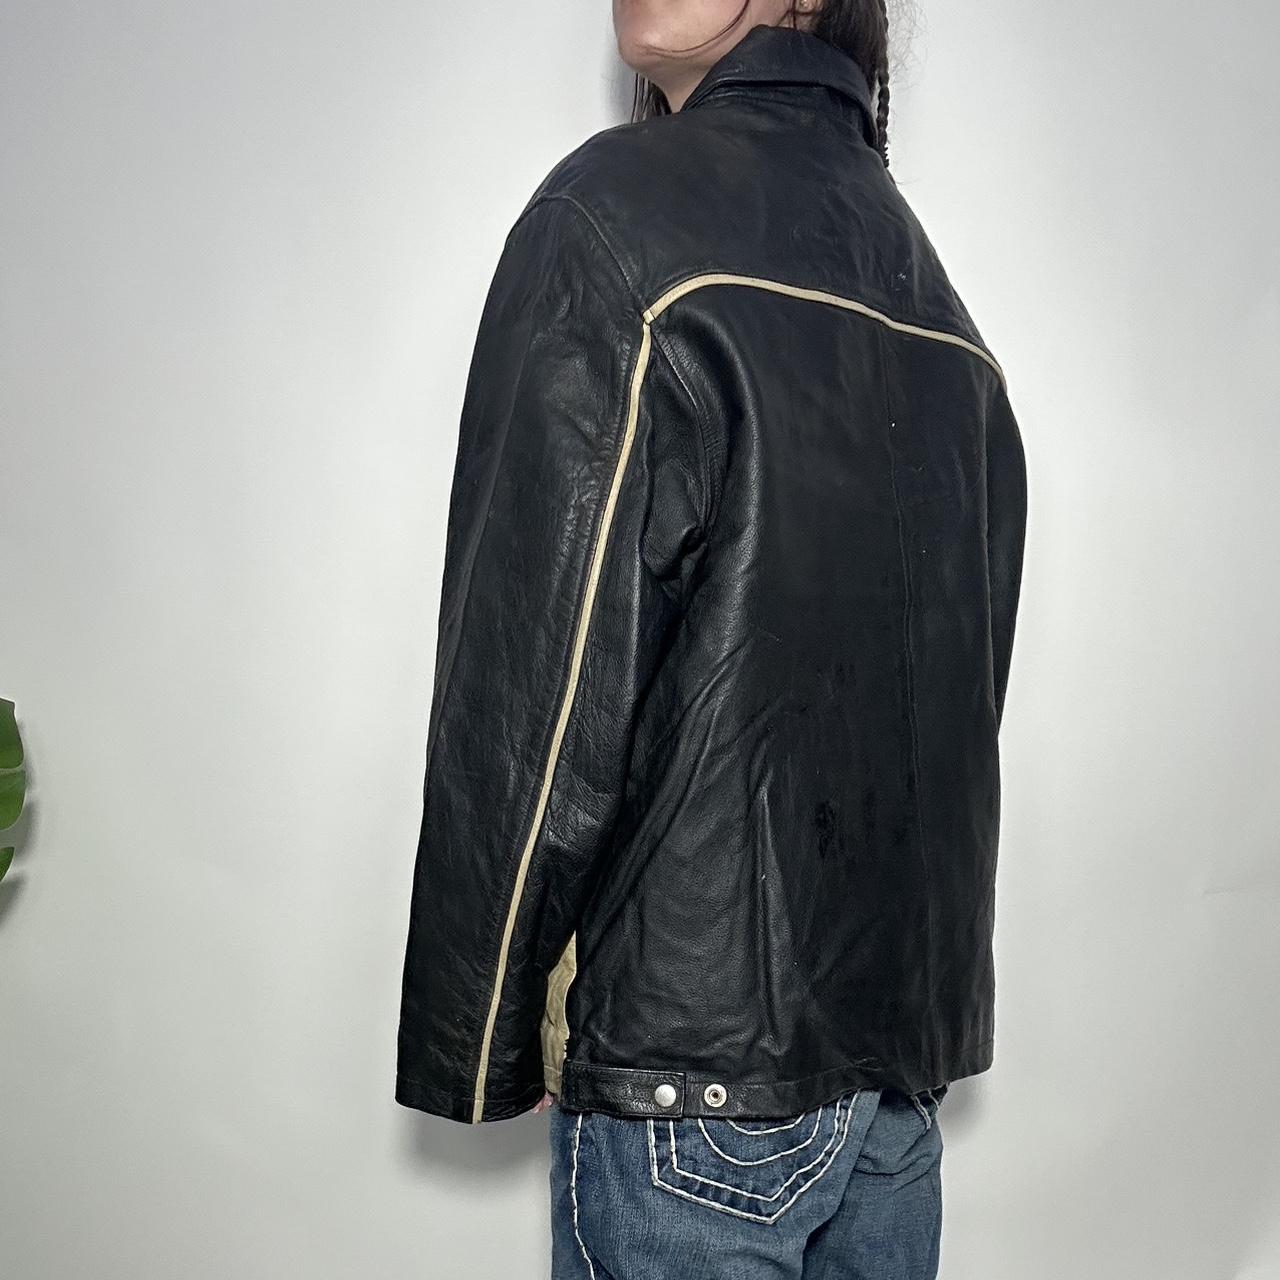 Vintage 90s real leather Bronsen American Rednick leather jacket